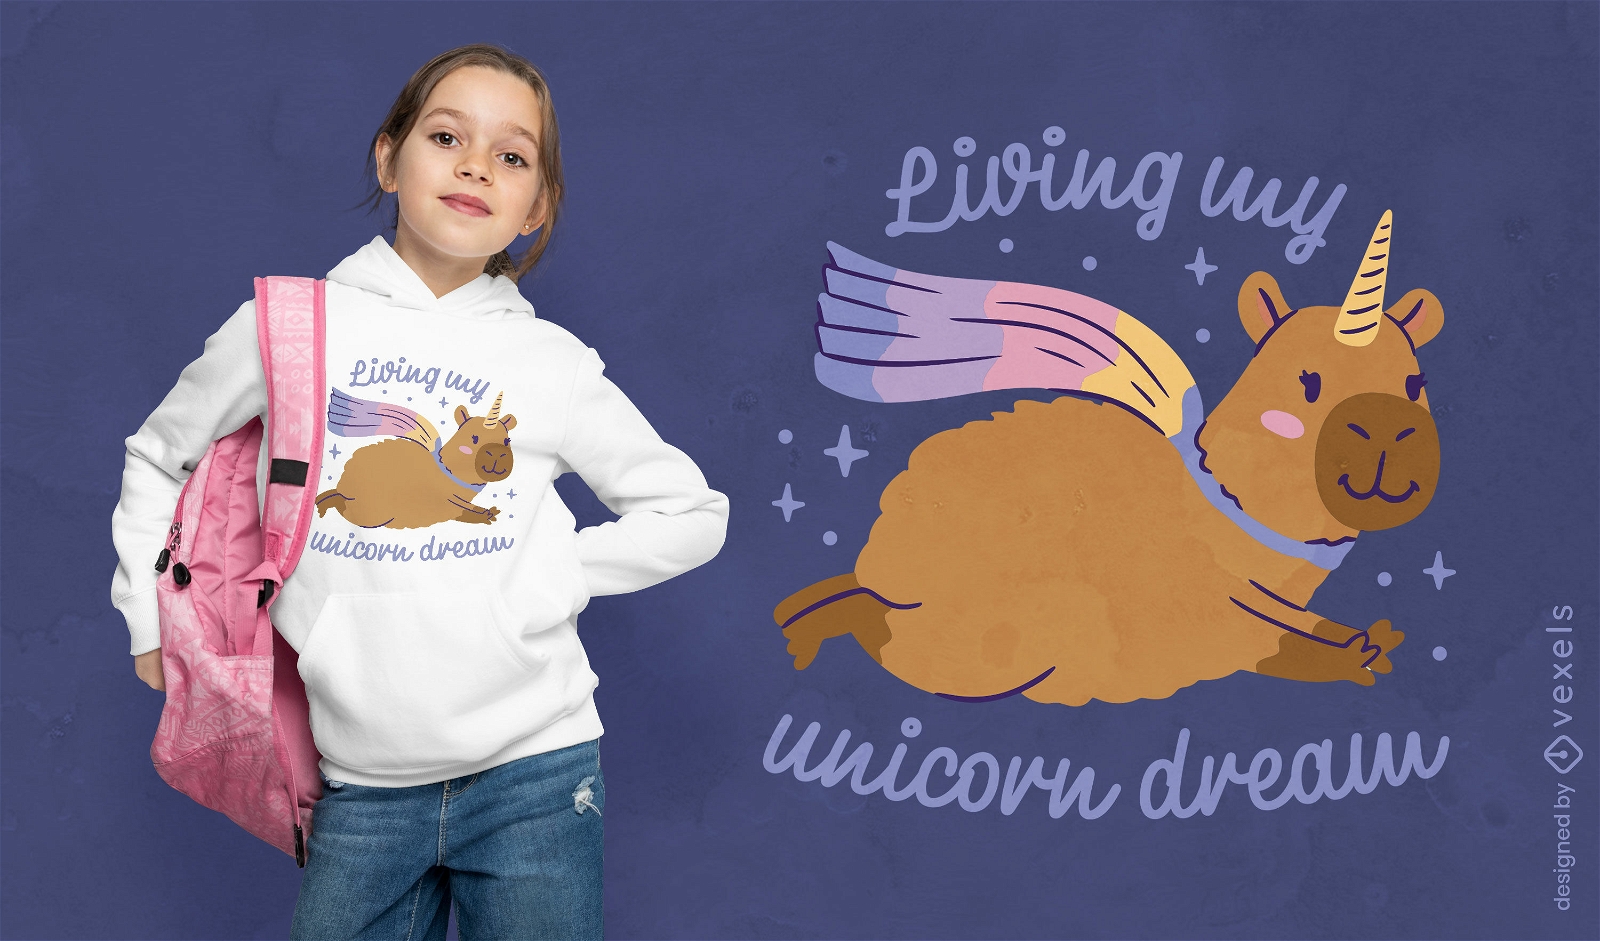 Diseño de camiseta de capibara de sueño unicornio.